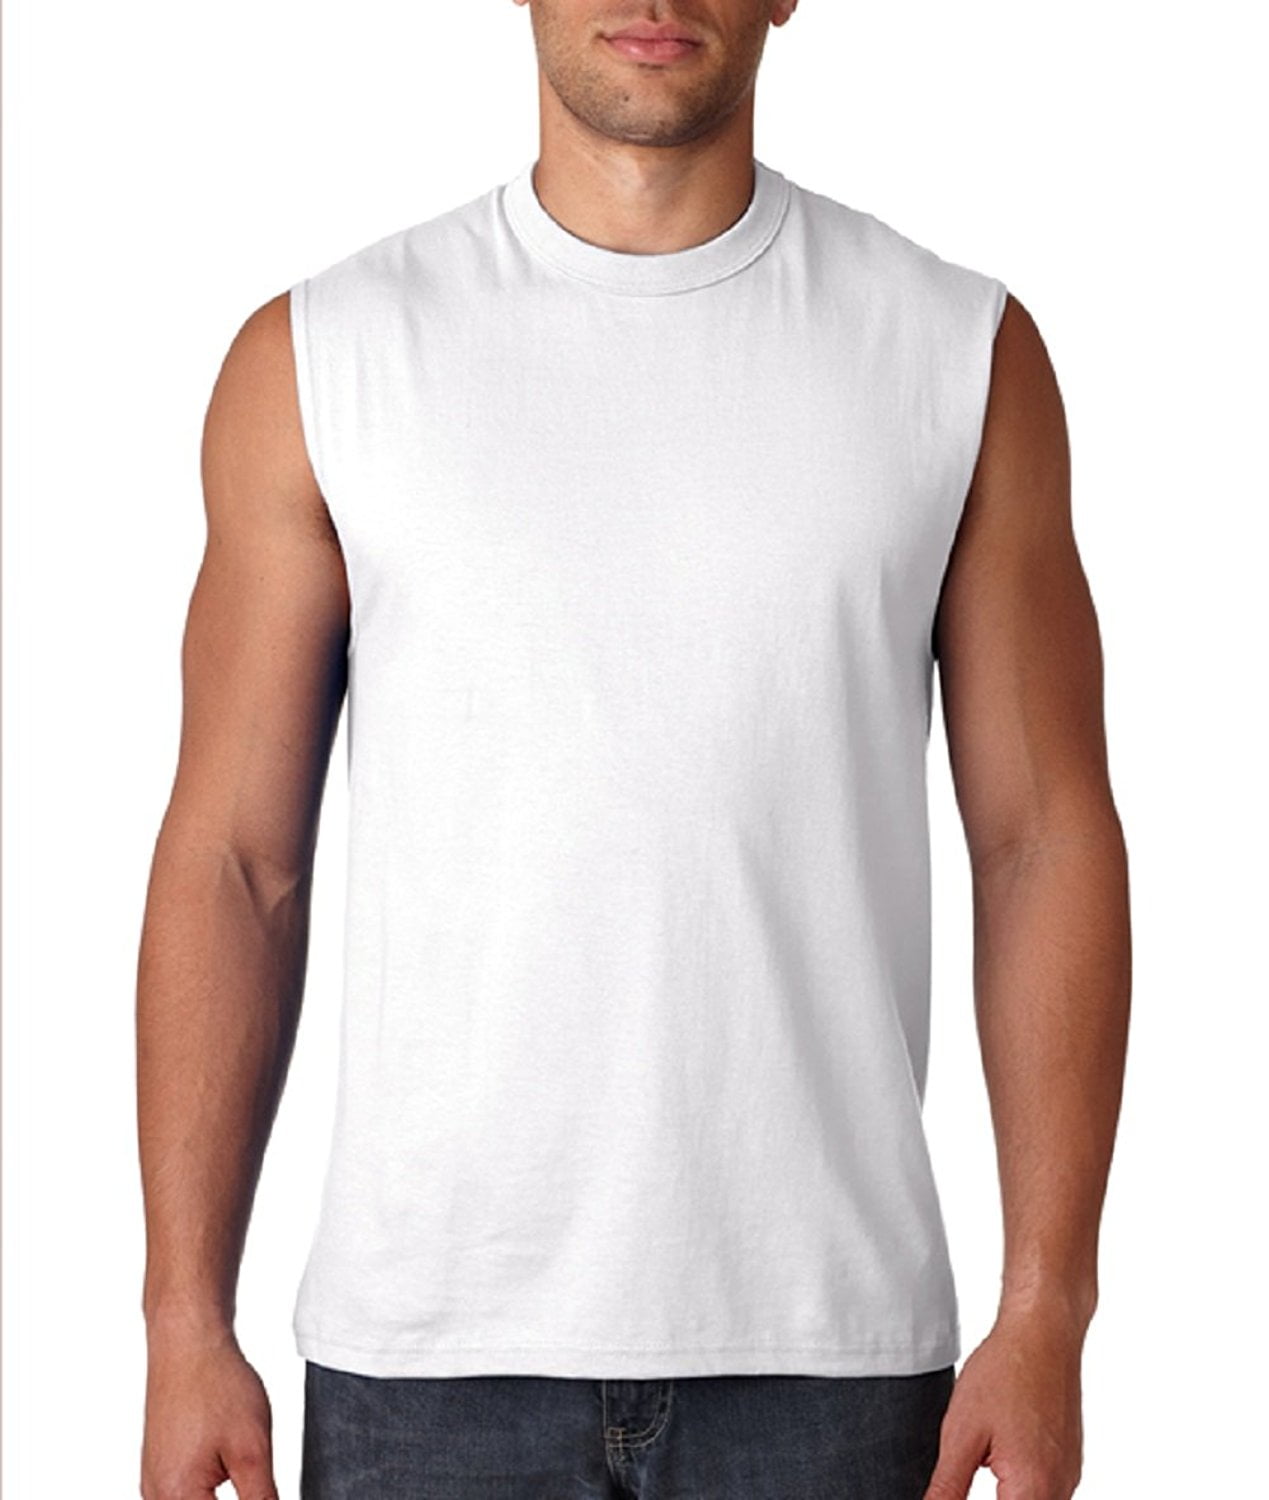 Hanes Men's Sport Styling Cotton Sleeveless T-Shirts w/ Cool DRI 4-Pack ...